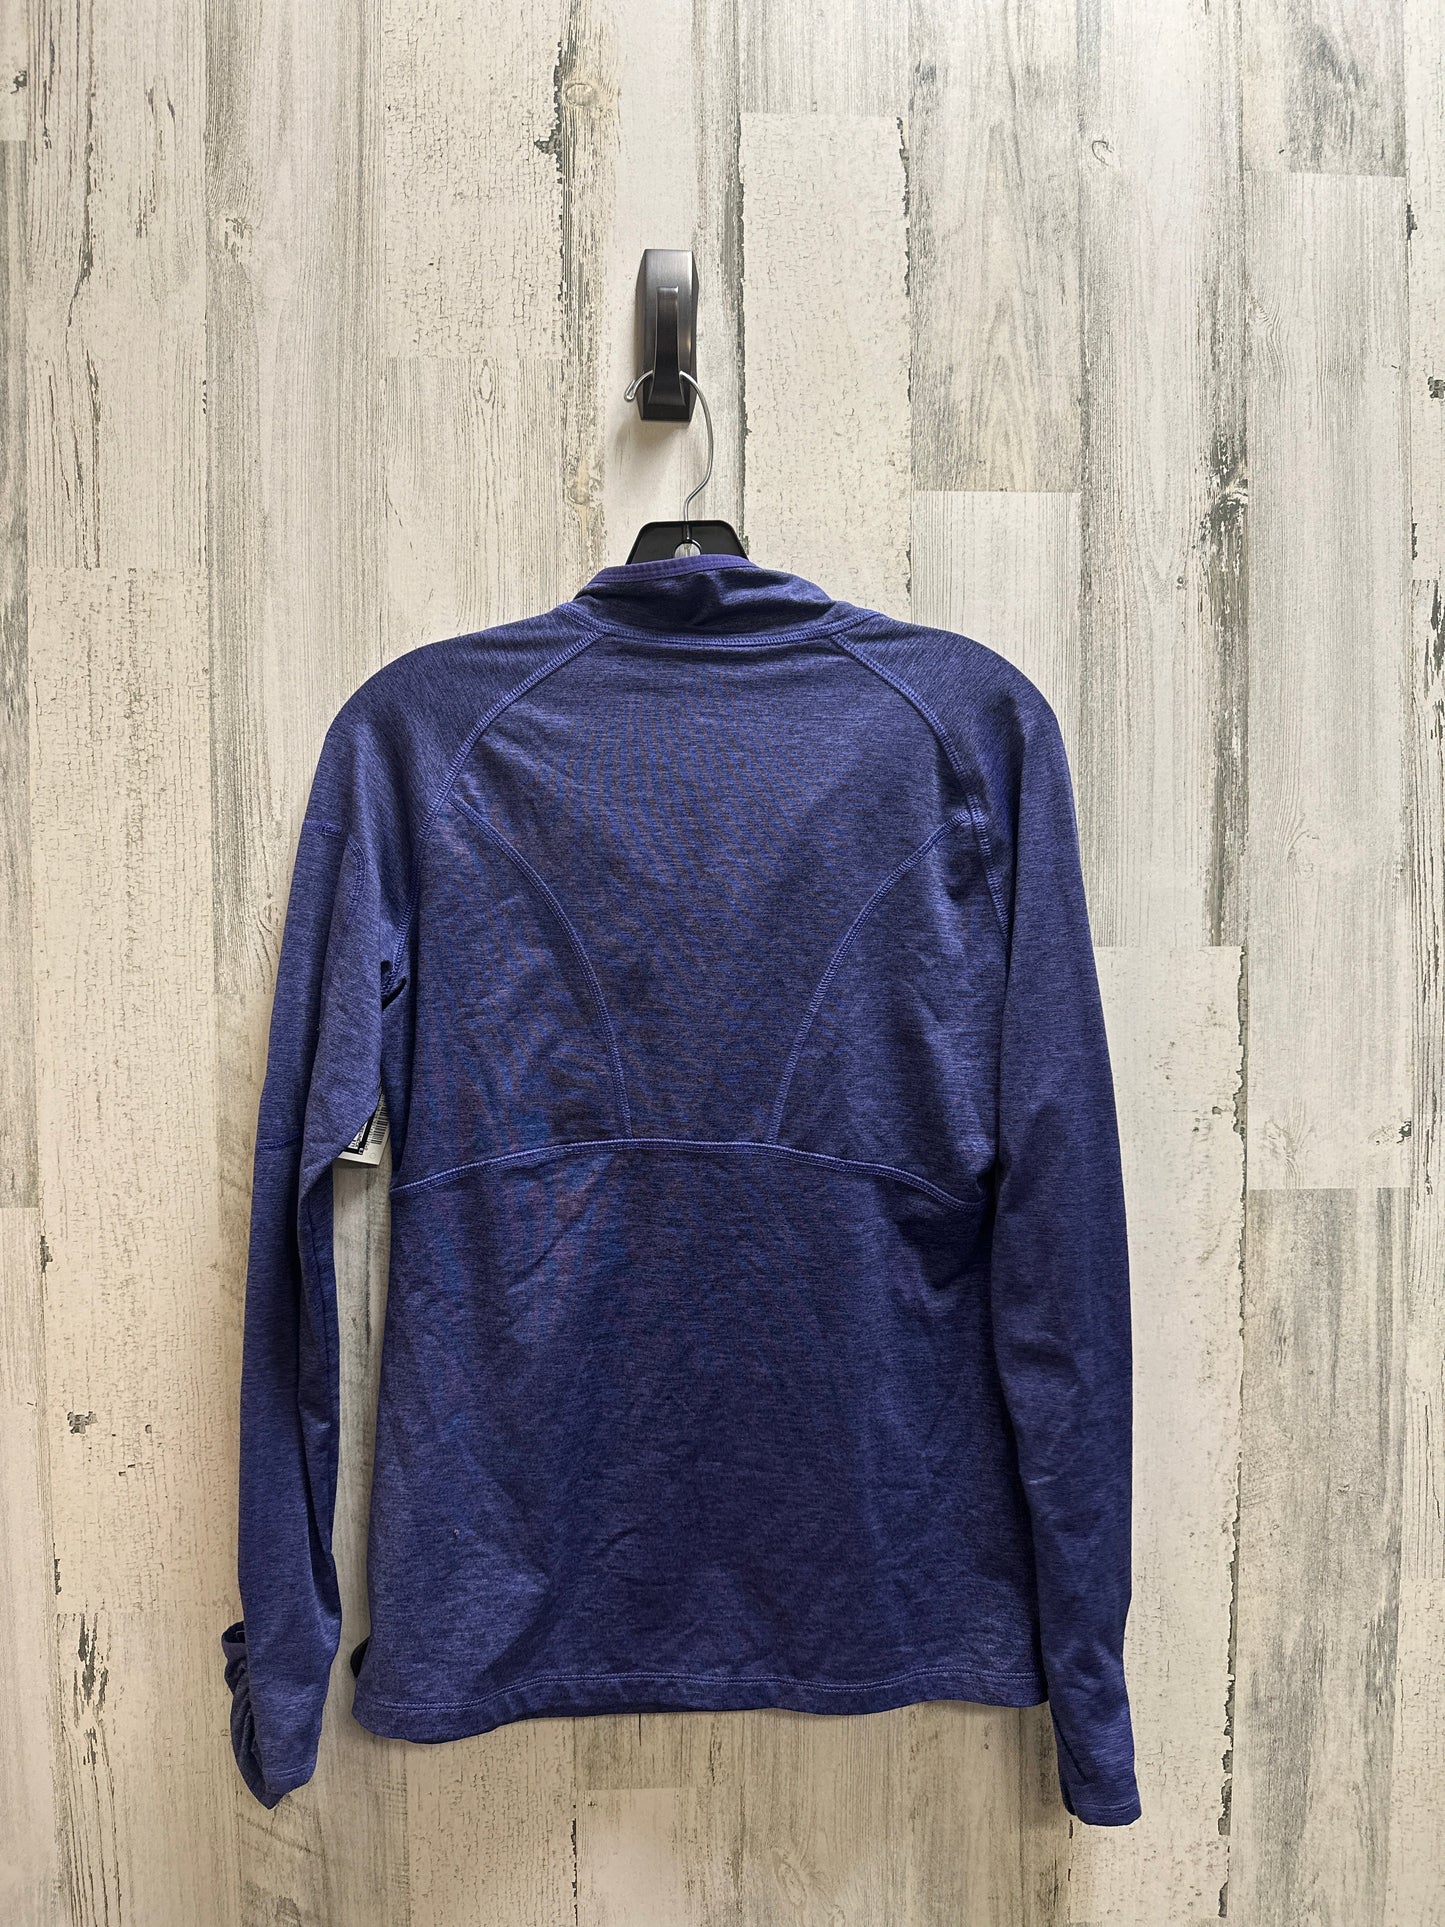 Athletic Sweatshirt Crewneck By Kirkland  Size: S